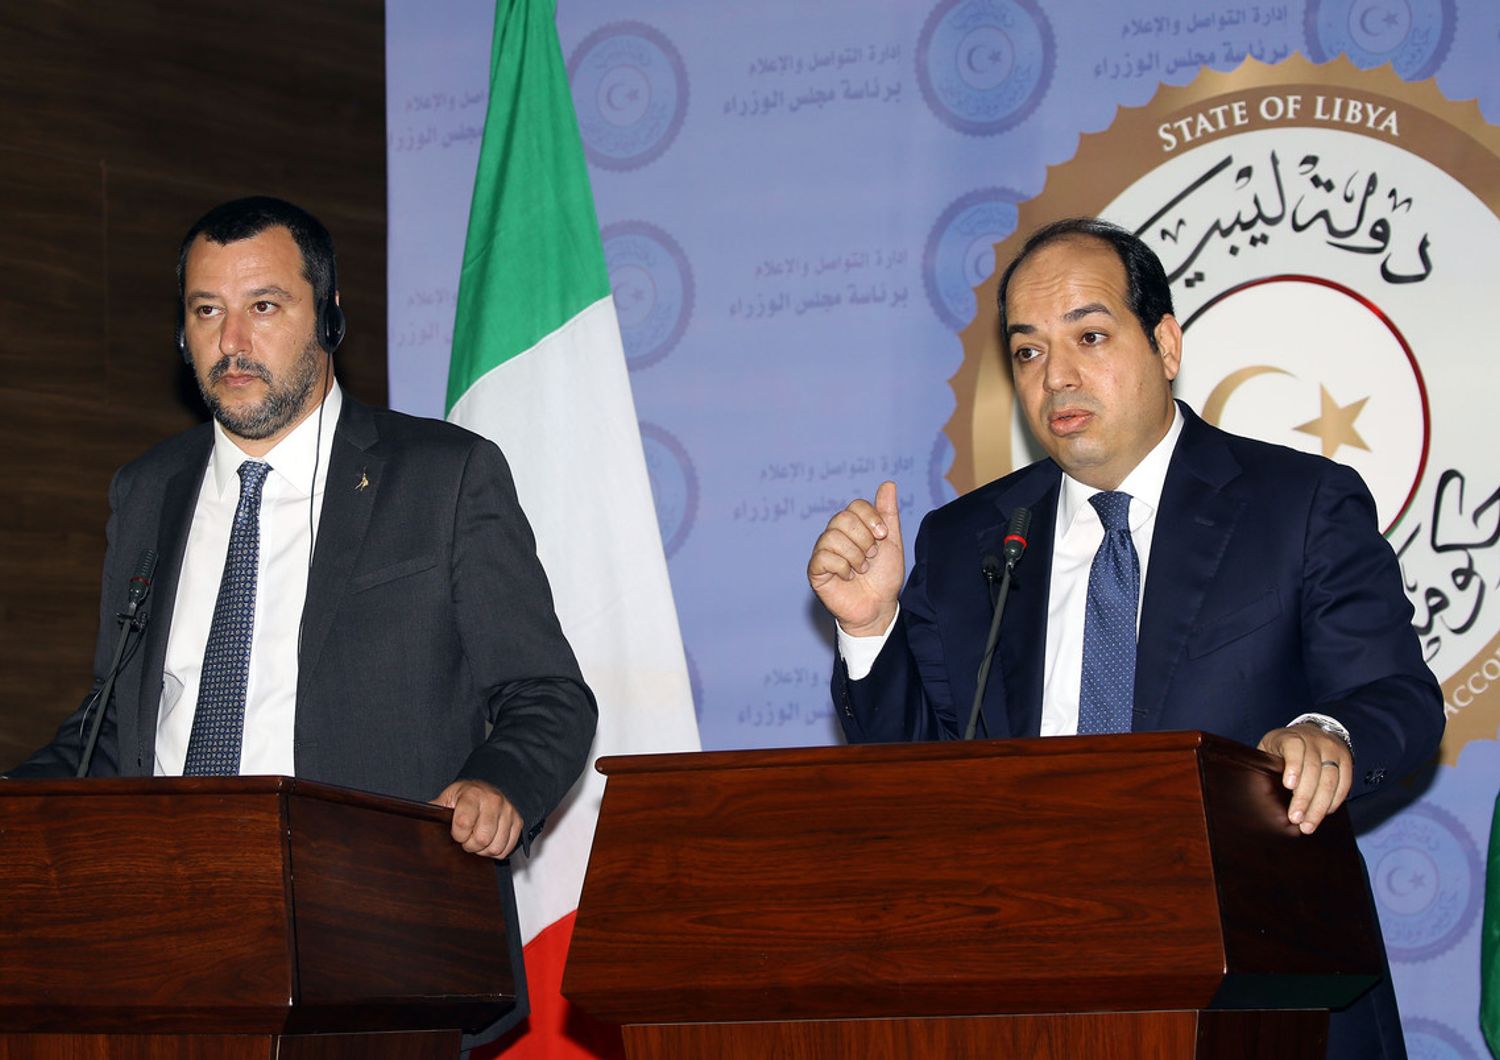 &nbsp;Matteo Salvini con il premier libico Ahmed Mahiteeq